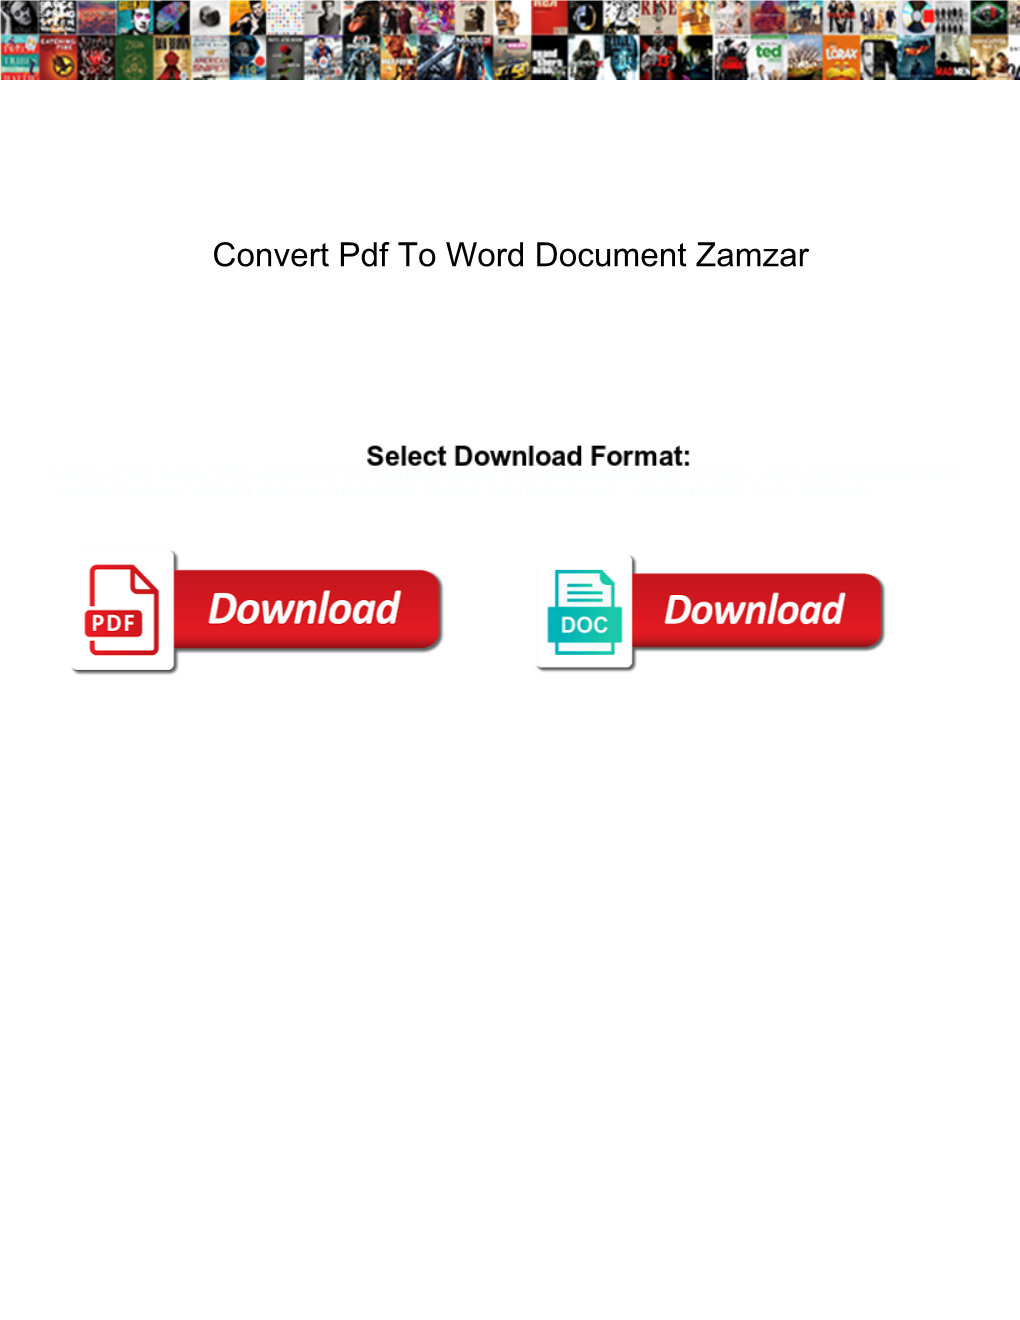 Convert Pdf to Word Document Zamzar Marshall